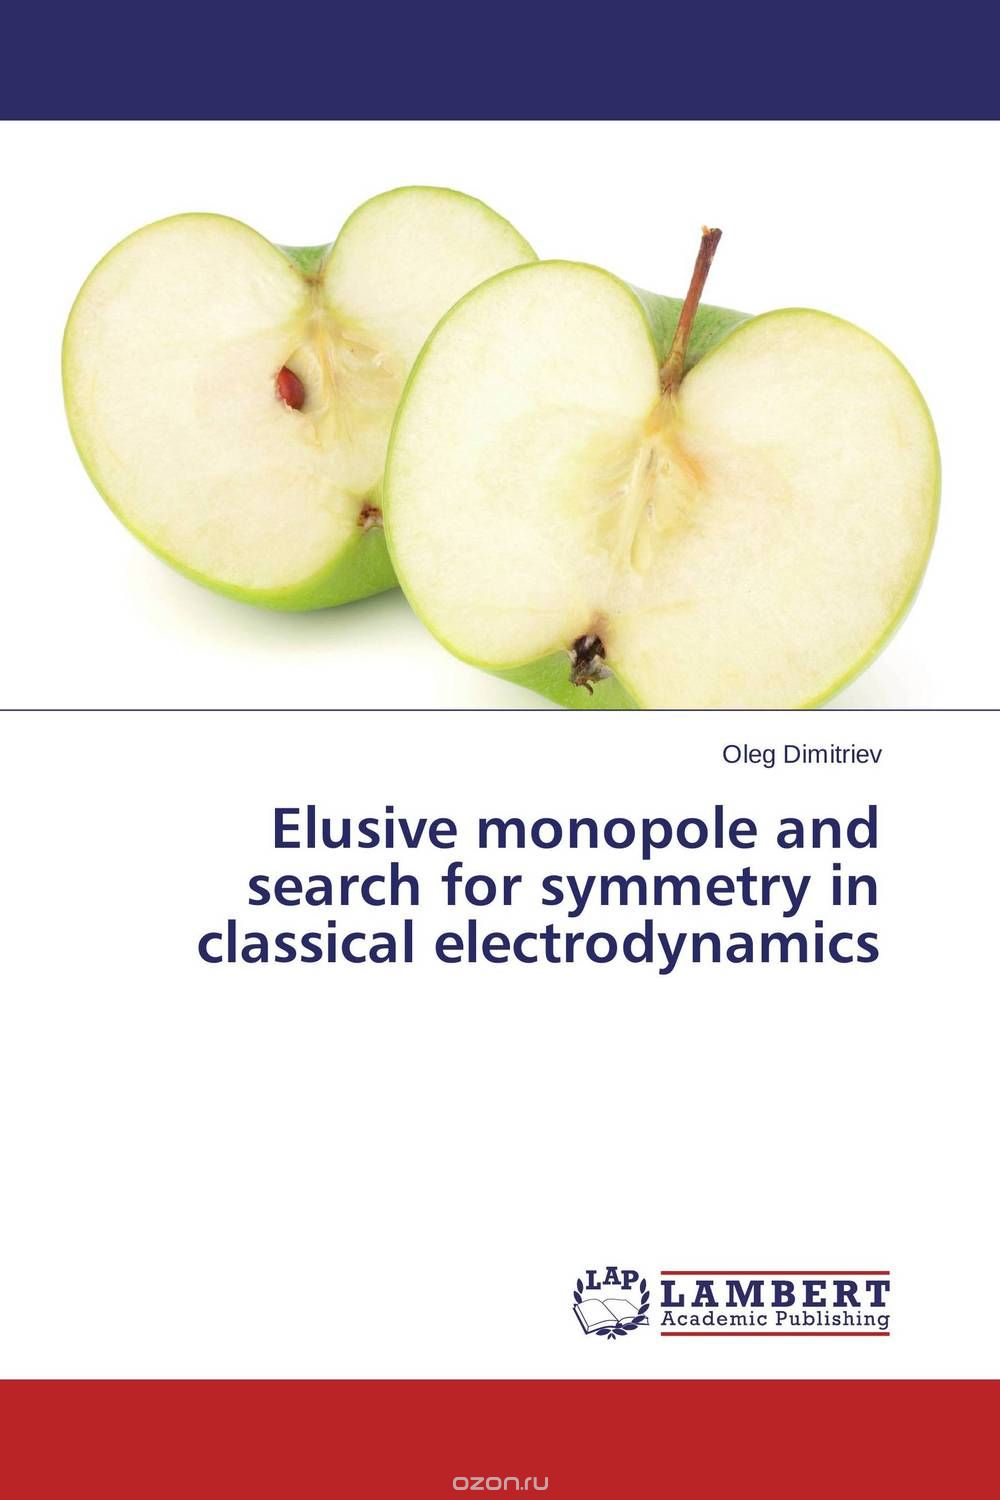 Скачать книгу "Elusive monopole and search for symmetry in classical electrodynamics"